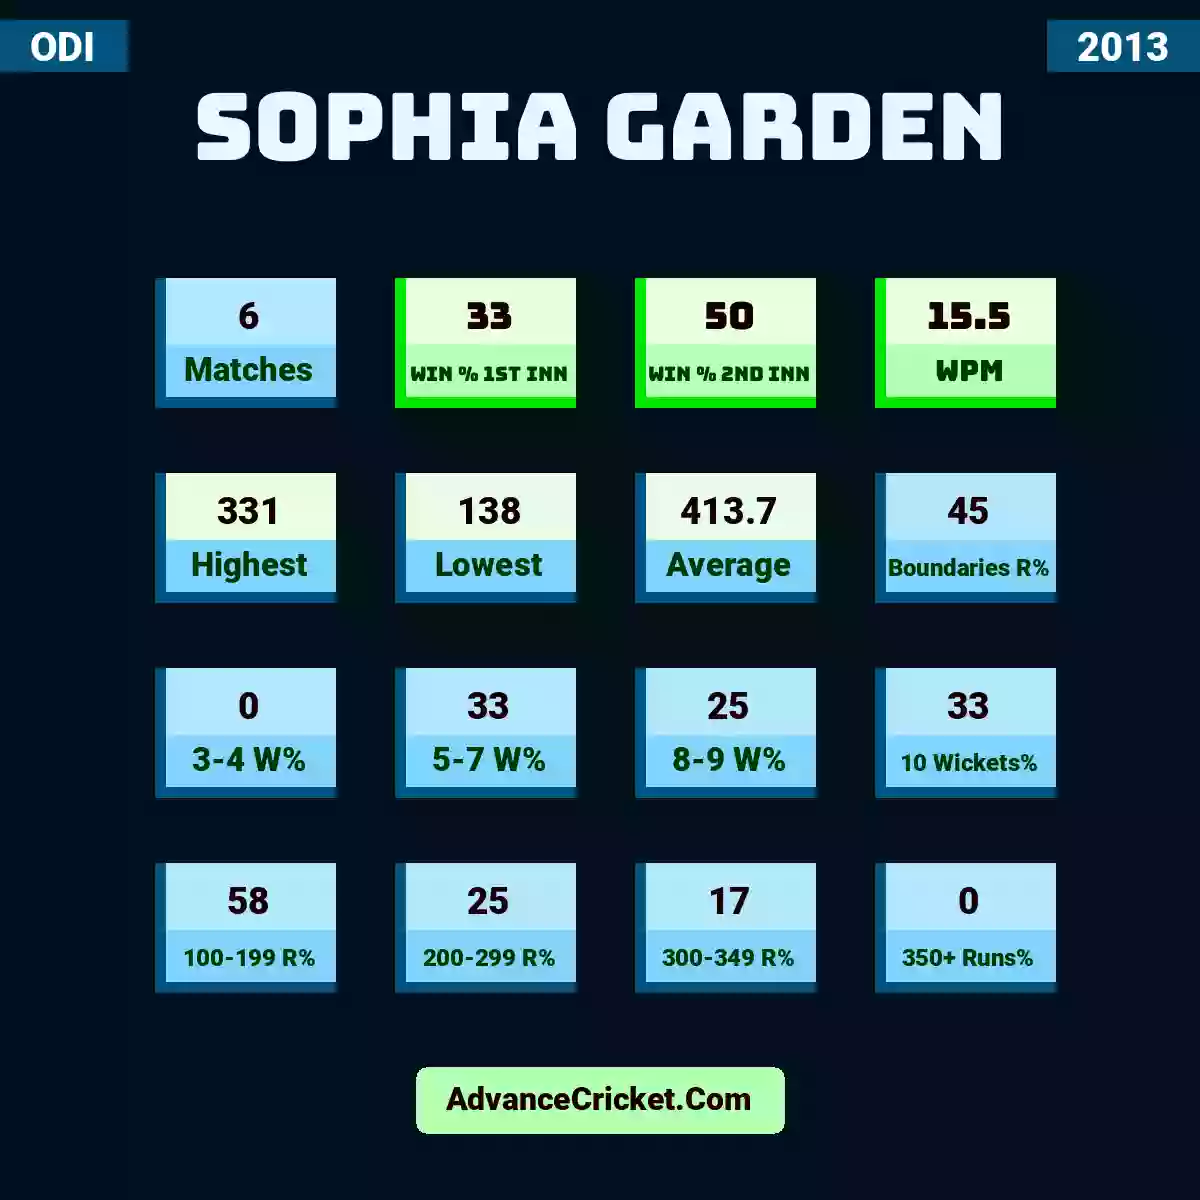 Image showing Sophia Garden with Matches: 6, Win % 1st Inn: 33, Win % 2nd Inn: 50, WPM: 15.5, Highest: 331, Lowest: 138, Average: 413.7, Boundaries R%: 45, 3-4 W%: 0, 5-7 W%: 33, 8-9 W%: 25, 10 Wickets%: 33, 100-199 R%: 58, 200-299 R%: 25, 300-349 R%: 17, 350+ Runs%: 0.